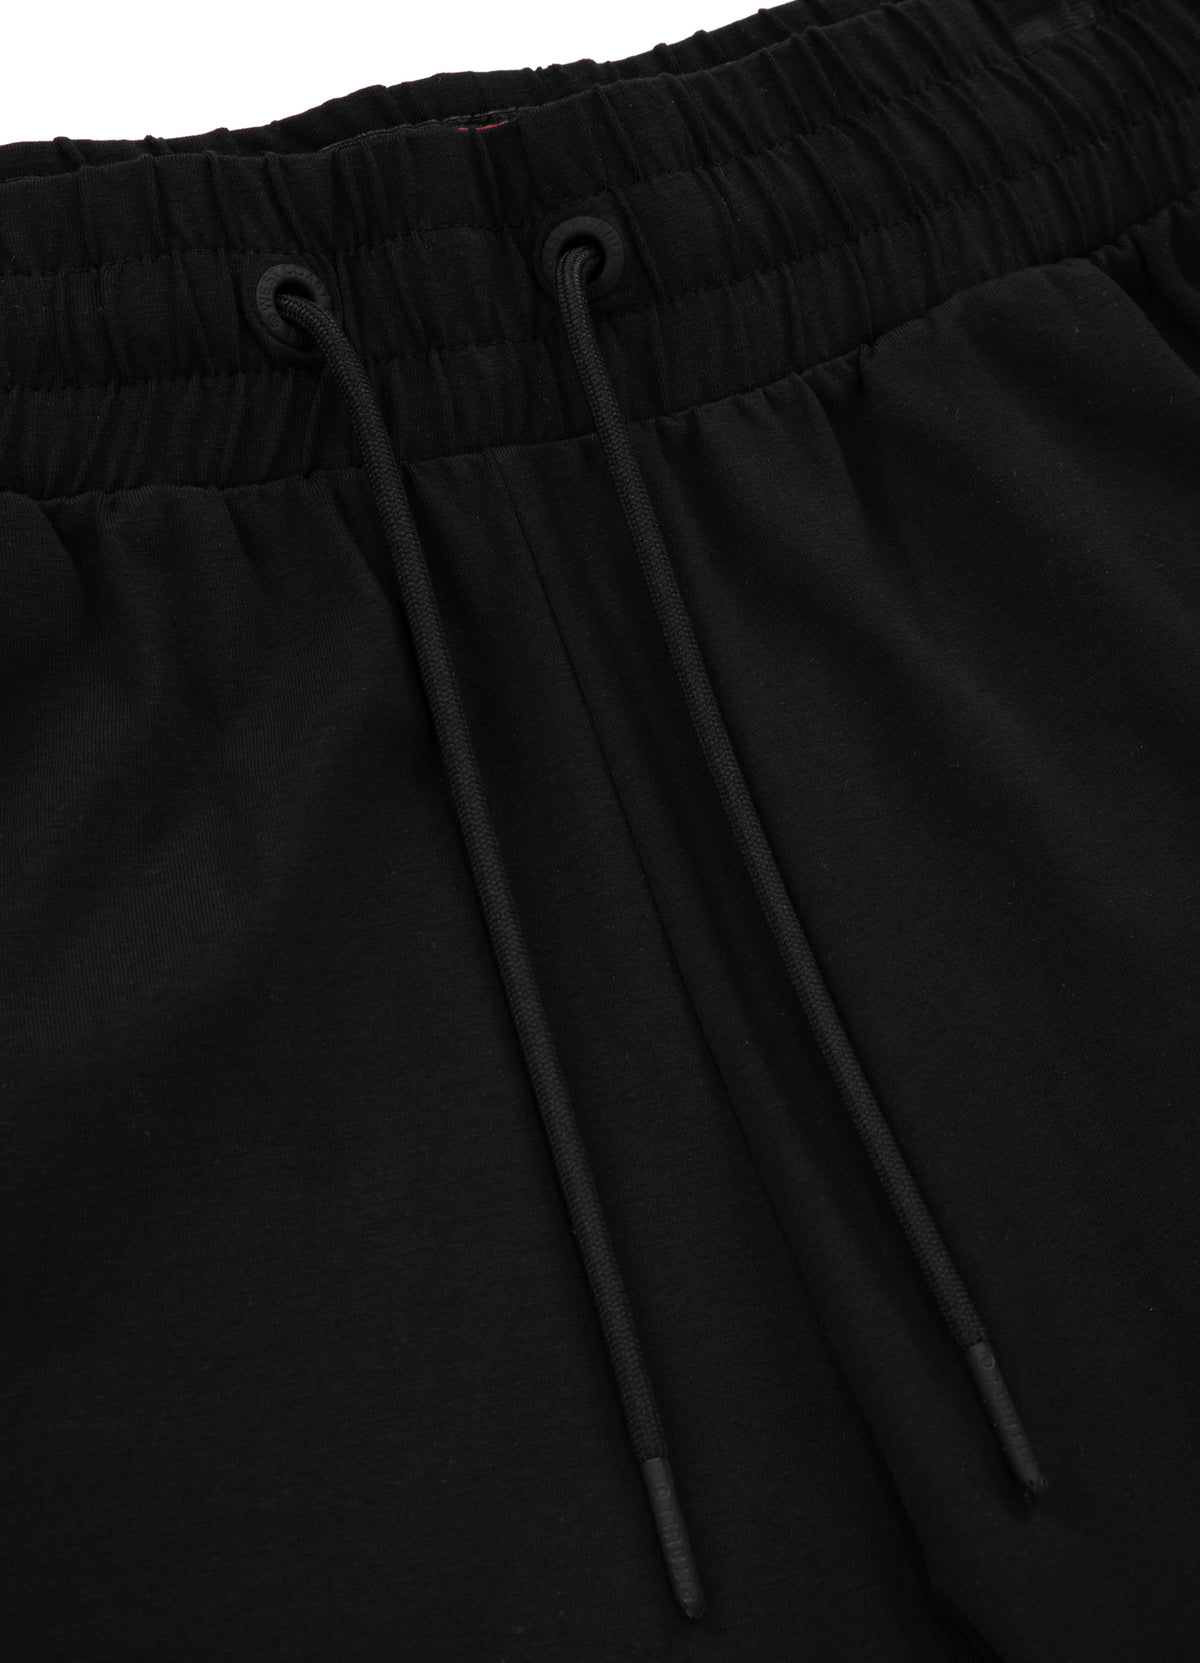 TARENTO 210 Black Jogging Pants - Pitbullstore.eu